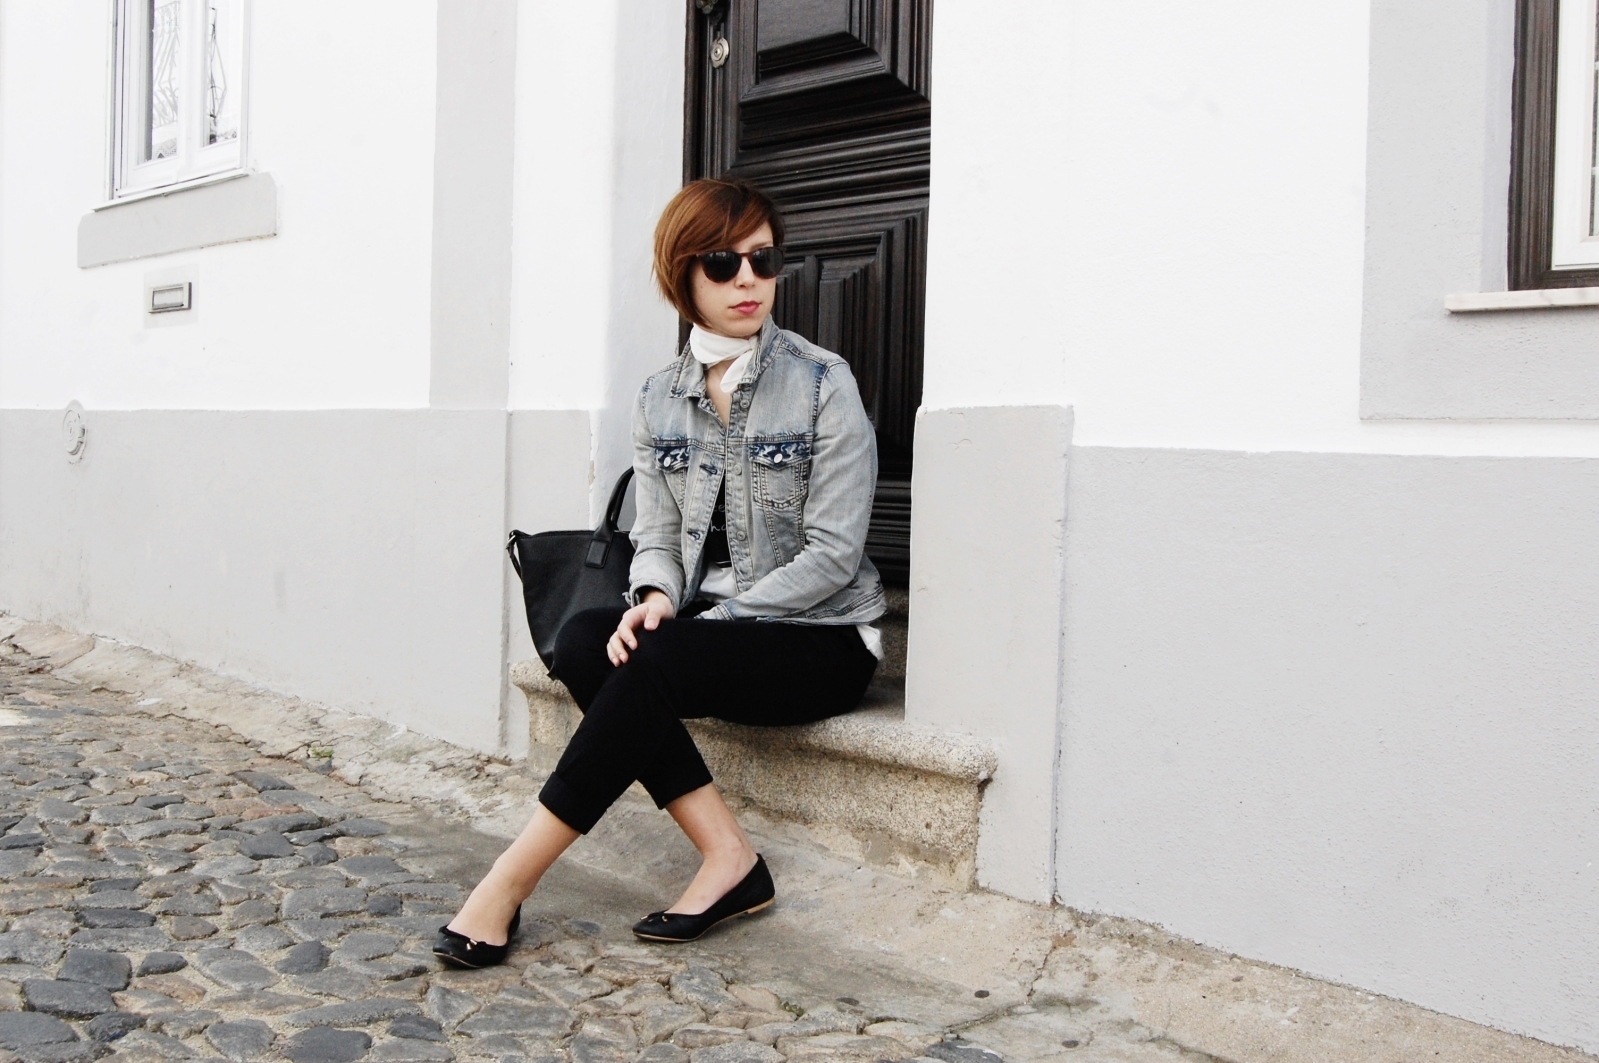 How to Wear Black Capri Pants (16 looks) | Women's Fashion